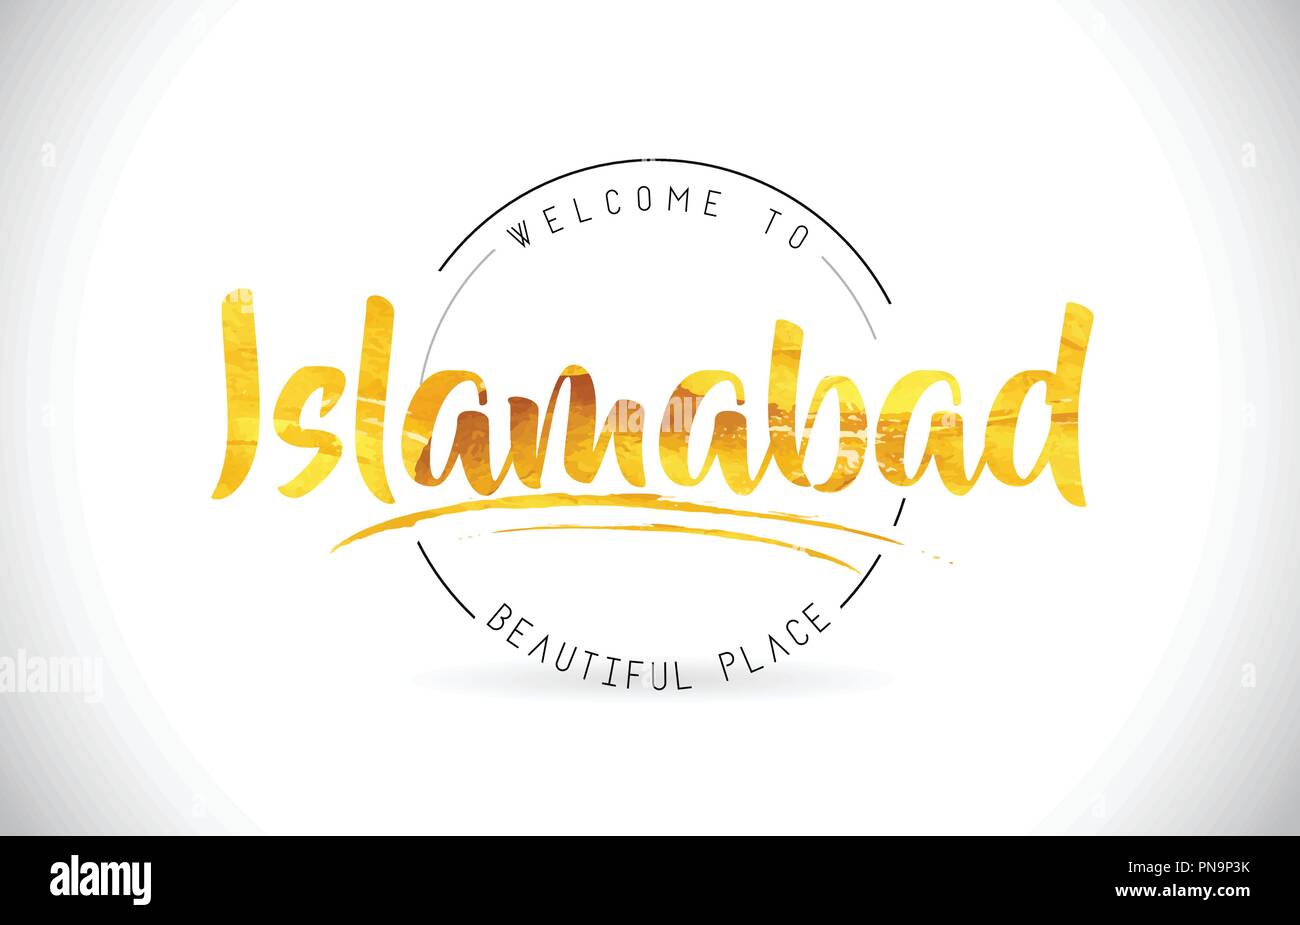 Islamabad Bienvenue dans Word avec texte et police manuscrite Illustration Design Texture or vecteur. Illustration de Vecteur